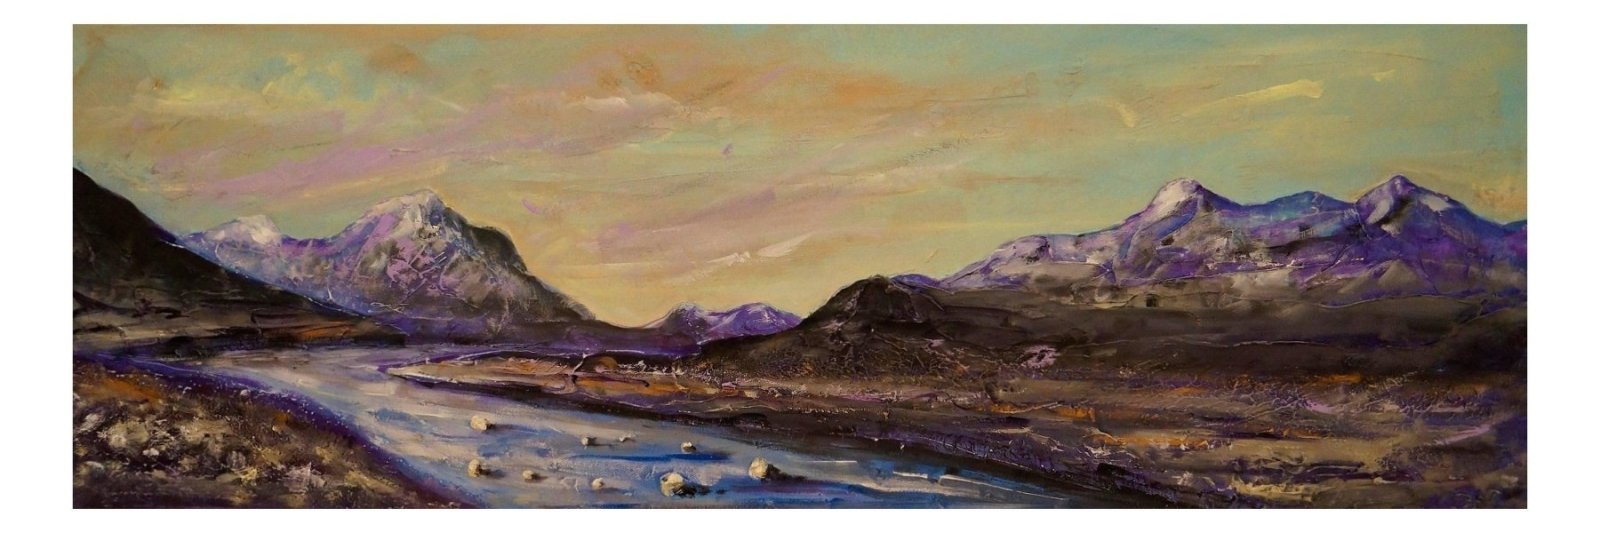 Cuillin Winter Skye Scotland | Painting Art Prints | Scottish Artist Hunter